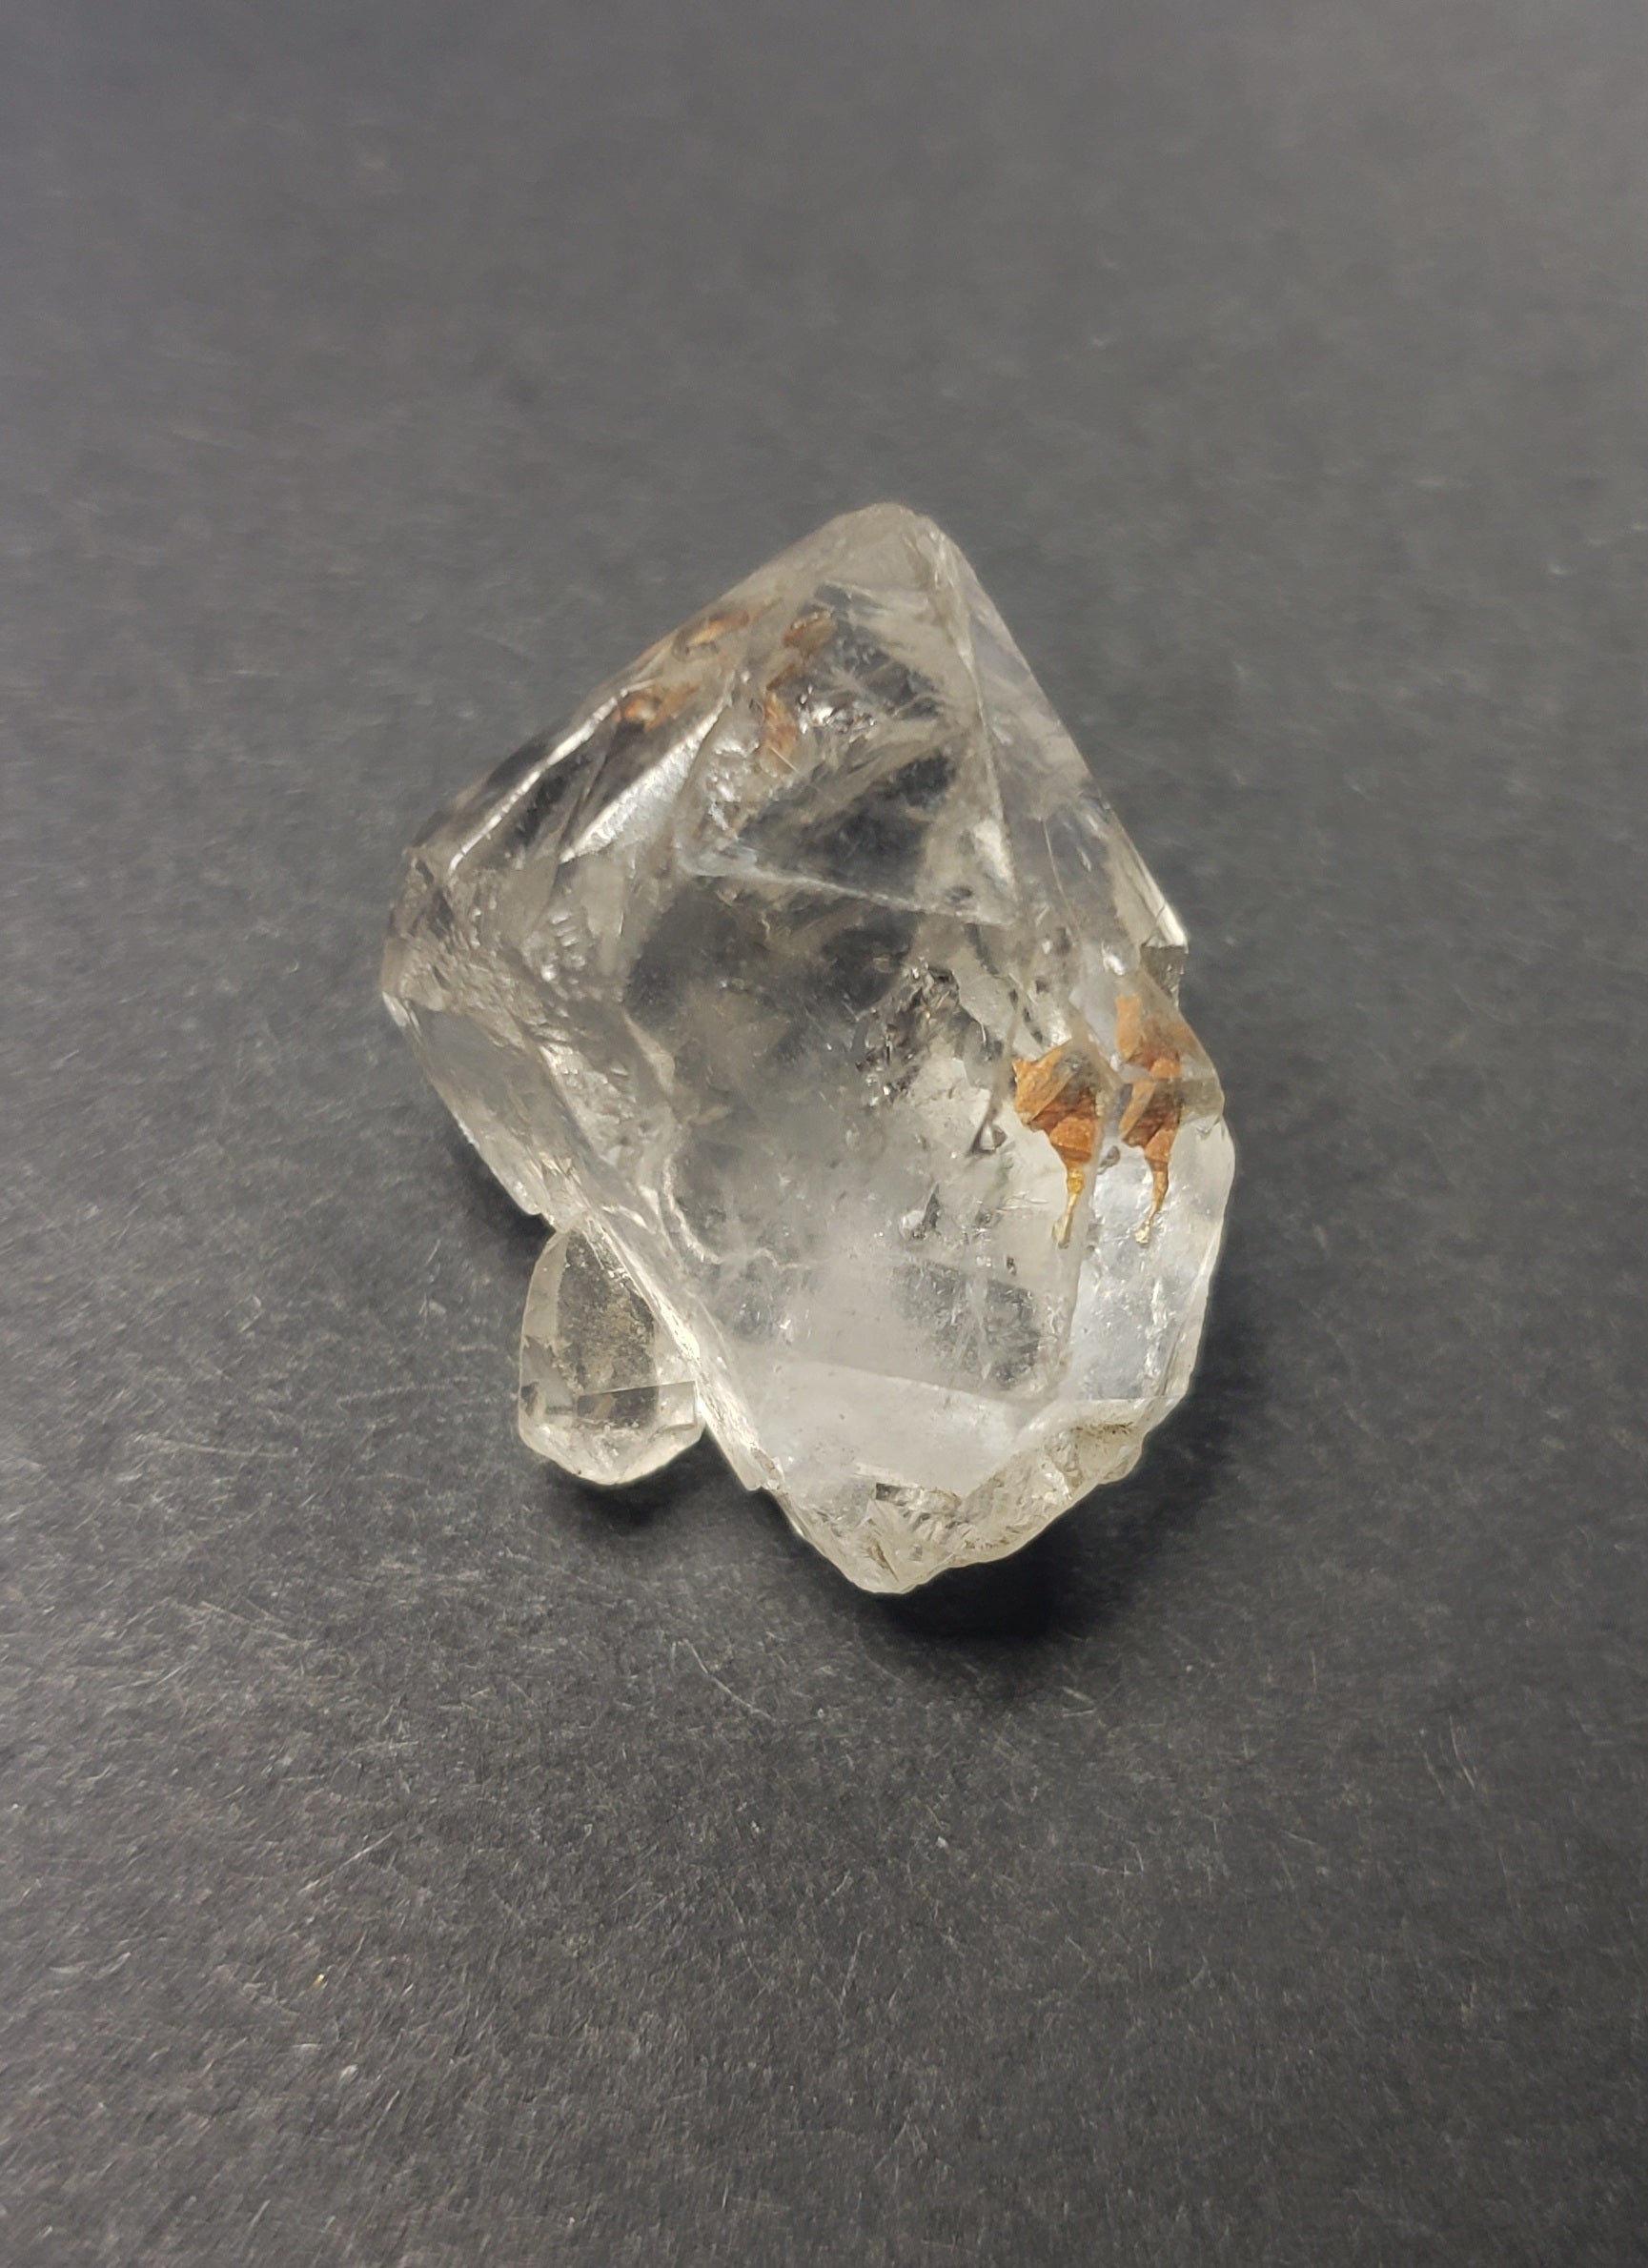 Double terminated quartz - Petroleum enhydro - 5g